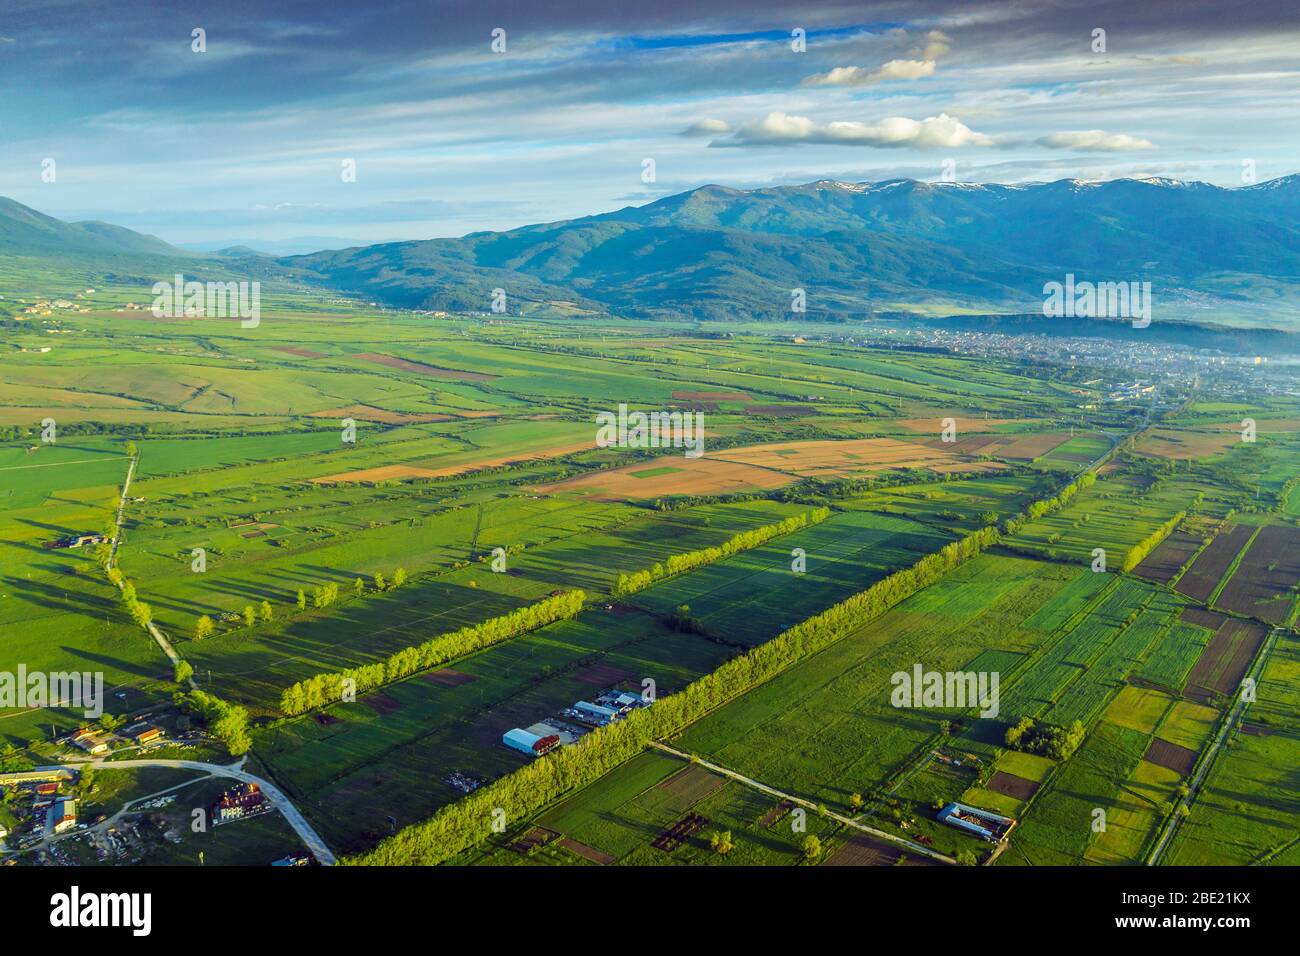 Europe, Bulgaria, Bansko, aerial view of Bansko countryside Stock Photo